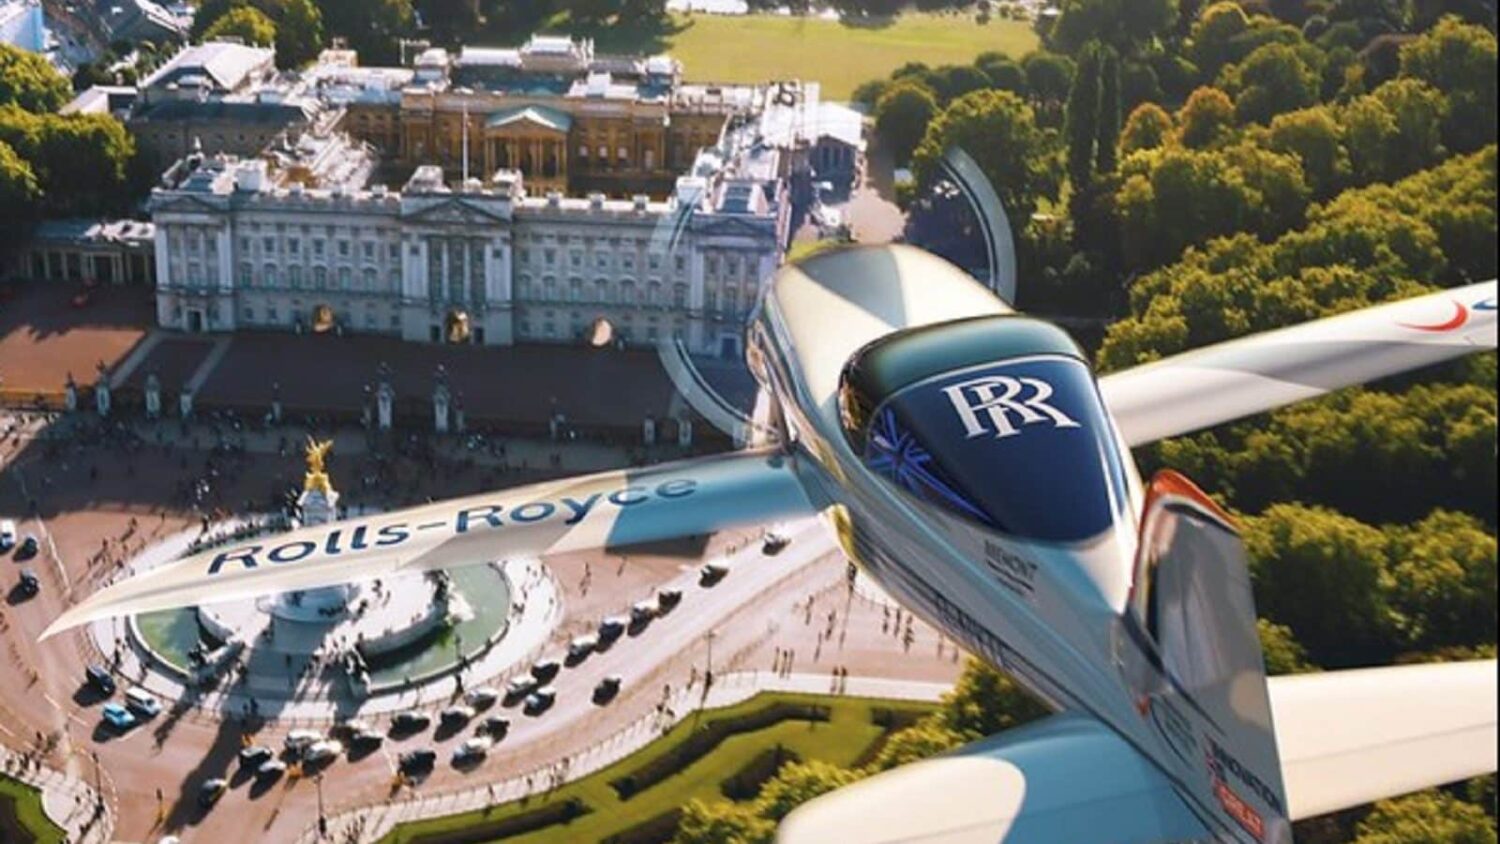 Rolls Royce: Παρουσίασε το πιο γρήγορο ηλεκτρικό αεροπλάνο του κόσμου